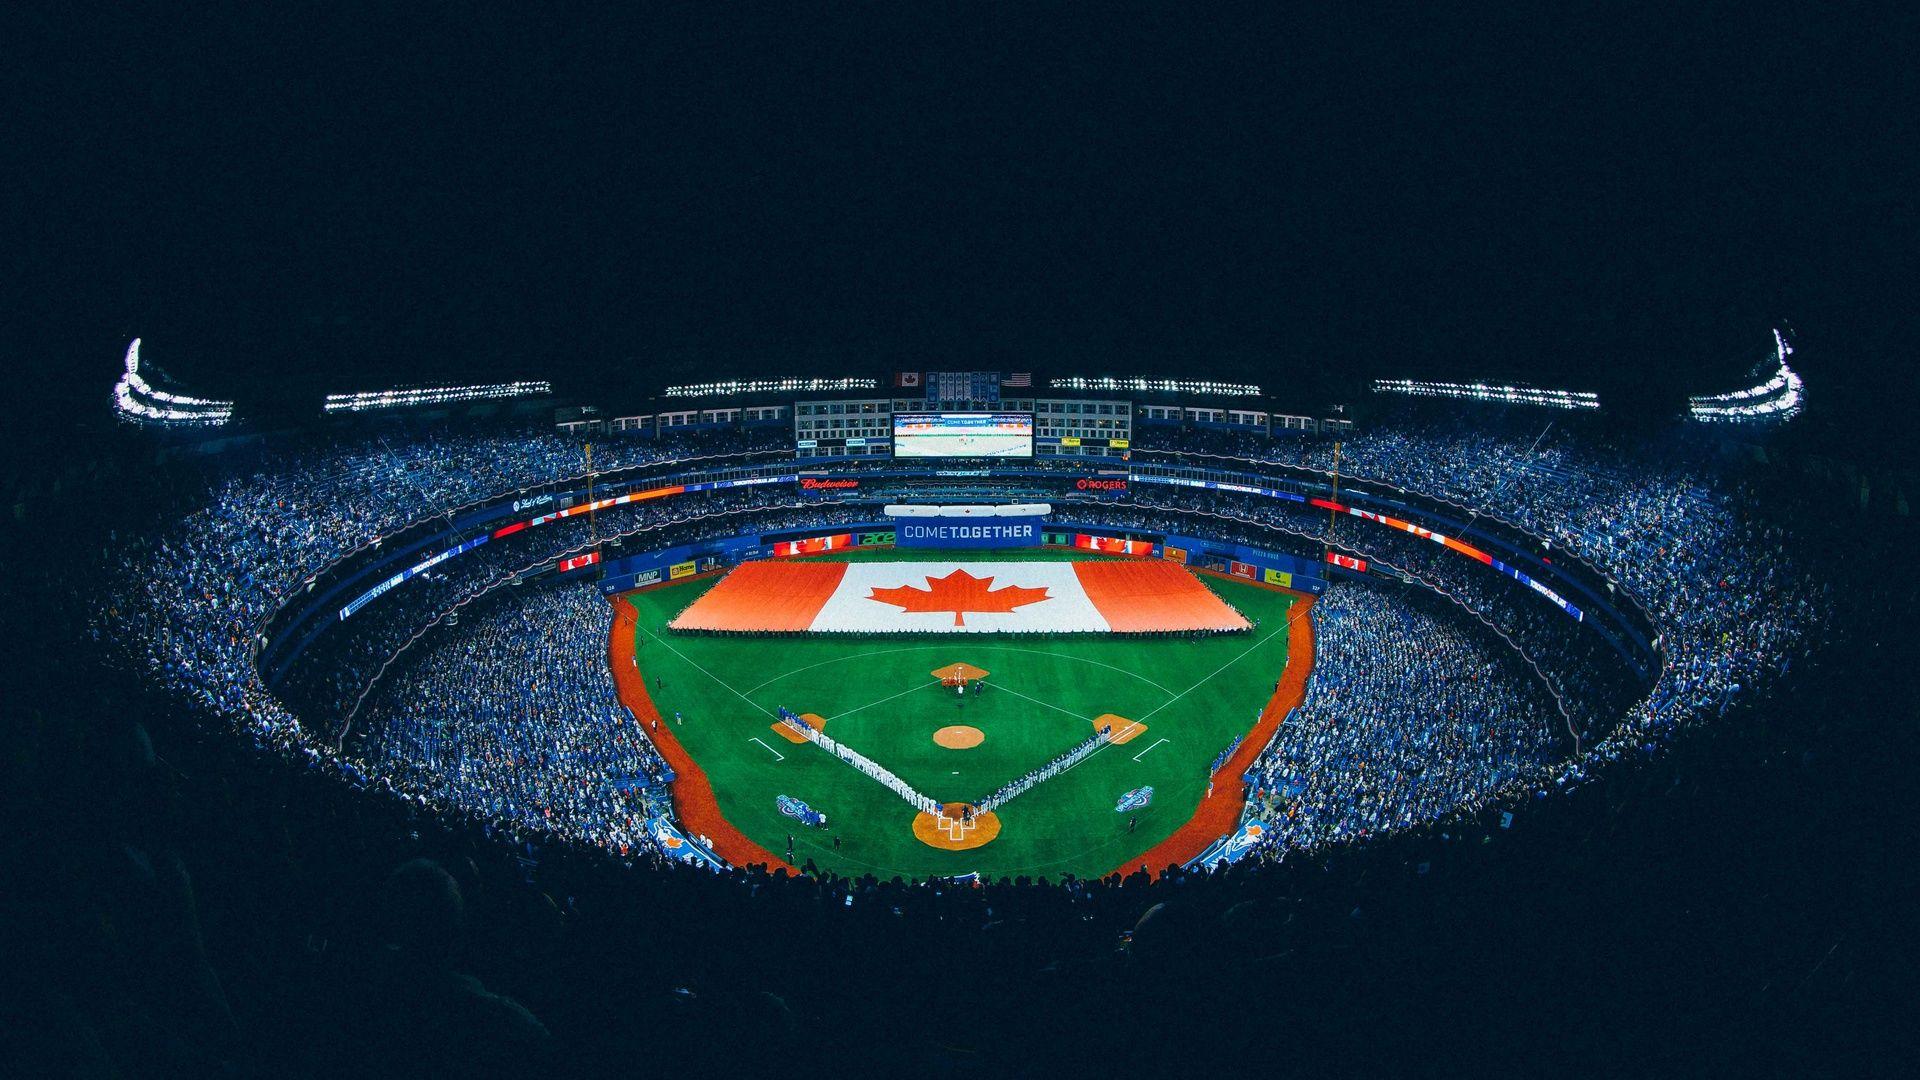 HD Toronto Blue Jays Wallpaper, Live Toronto Blue Jays Wallpaper